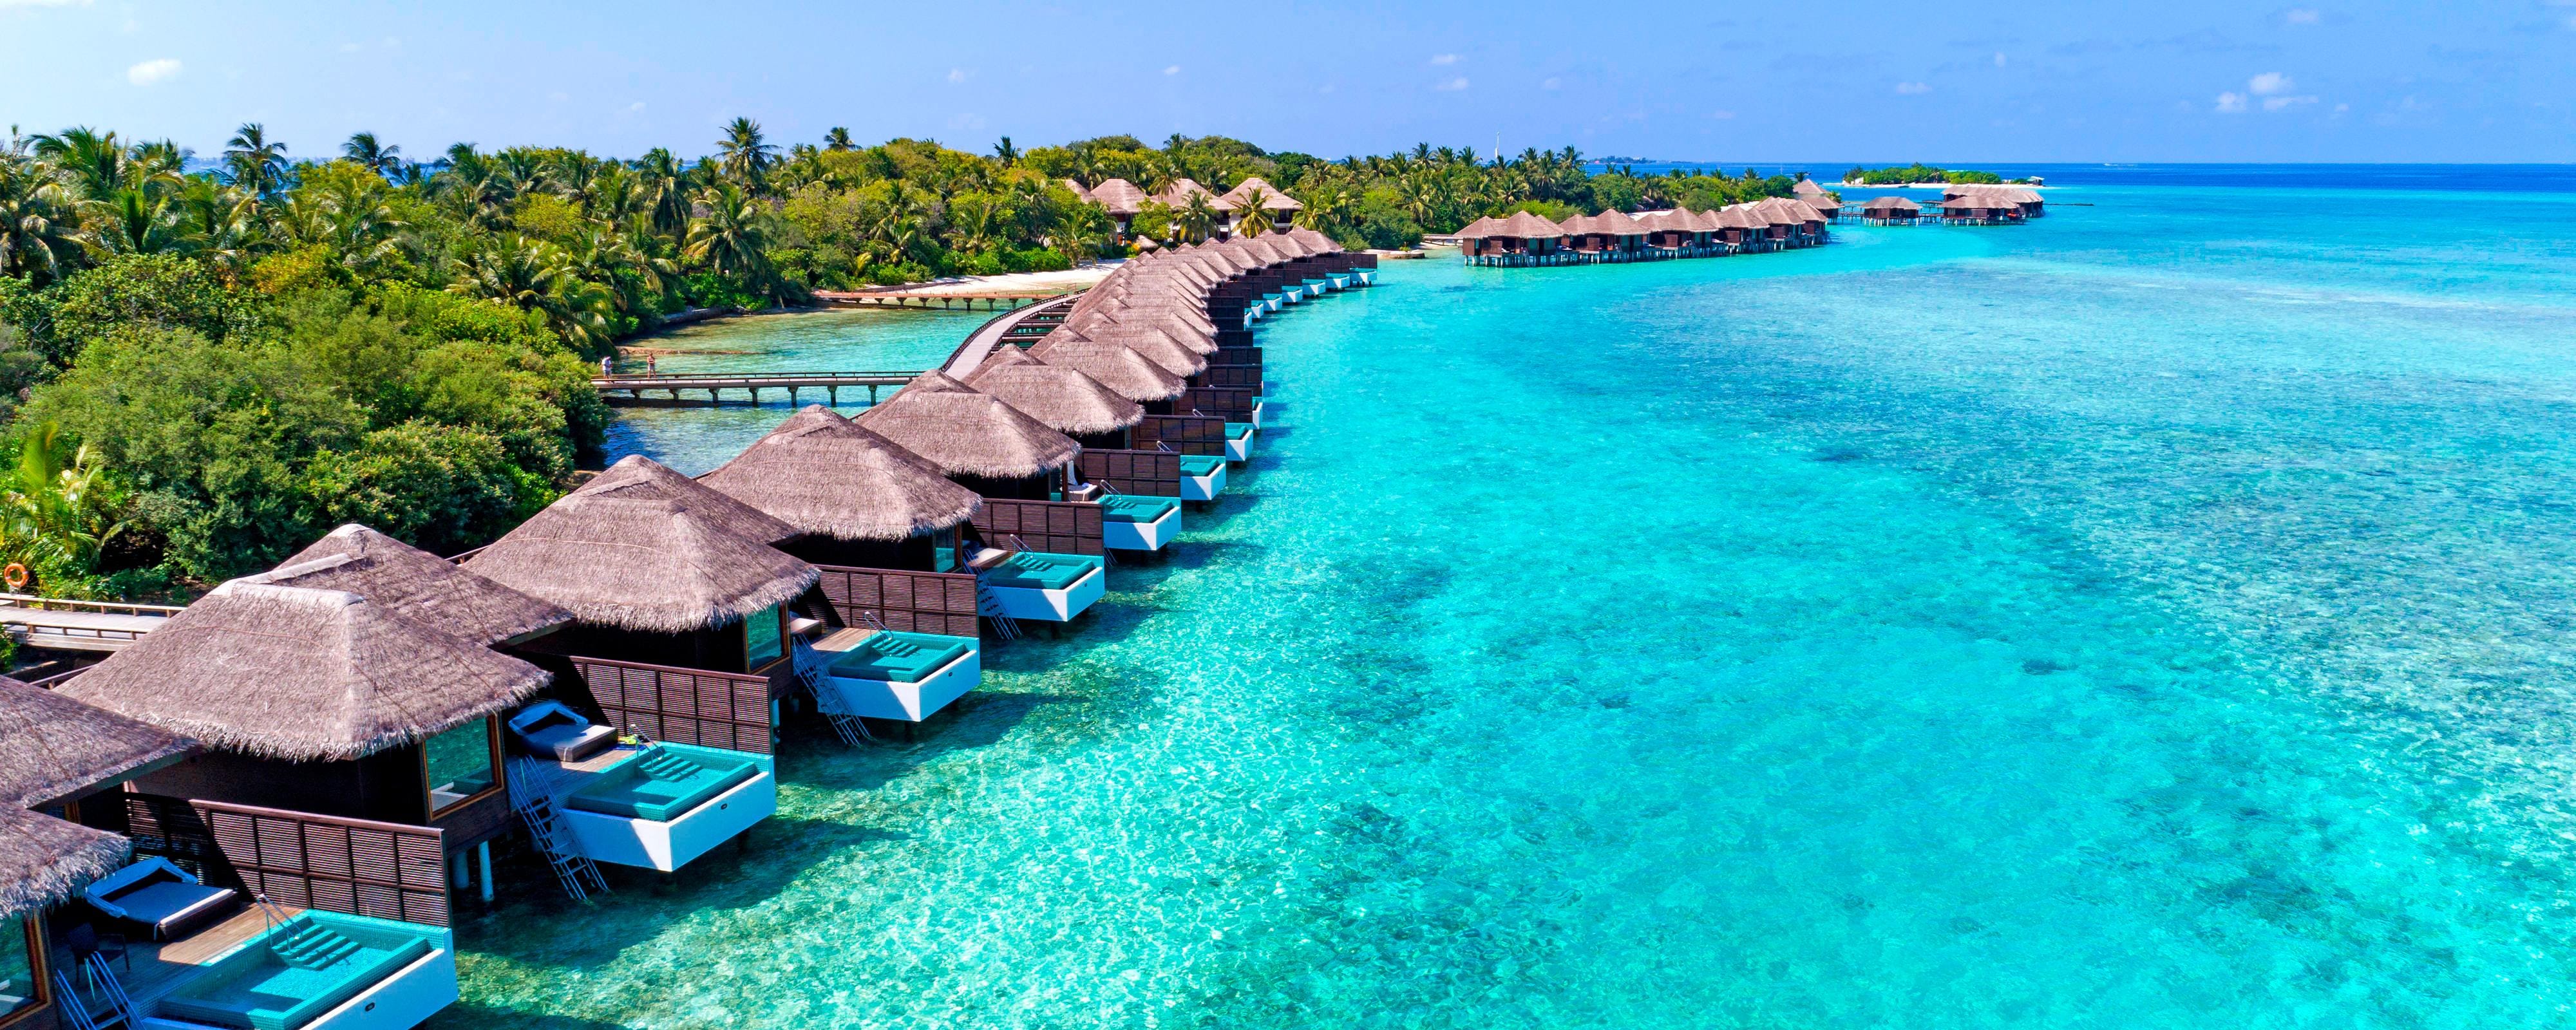 Maldives - 6 Reasons To Take A Family Vacation To The Maldives ...